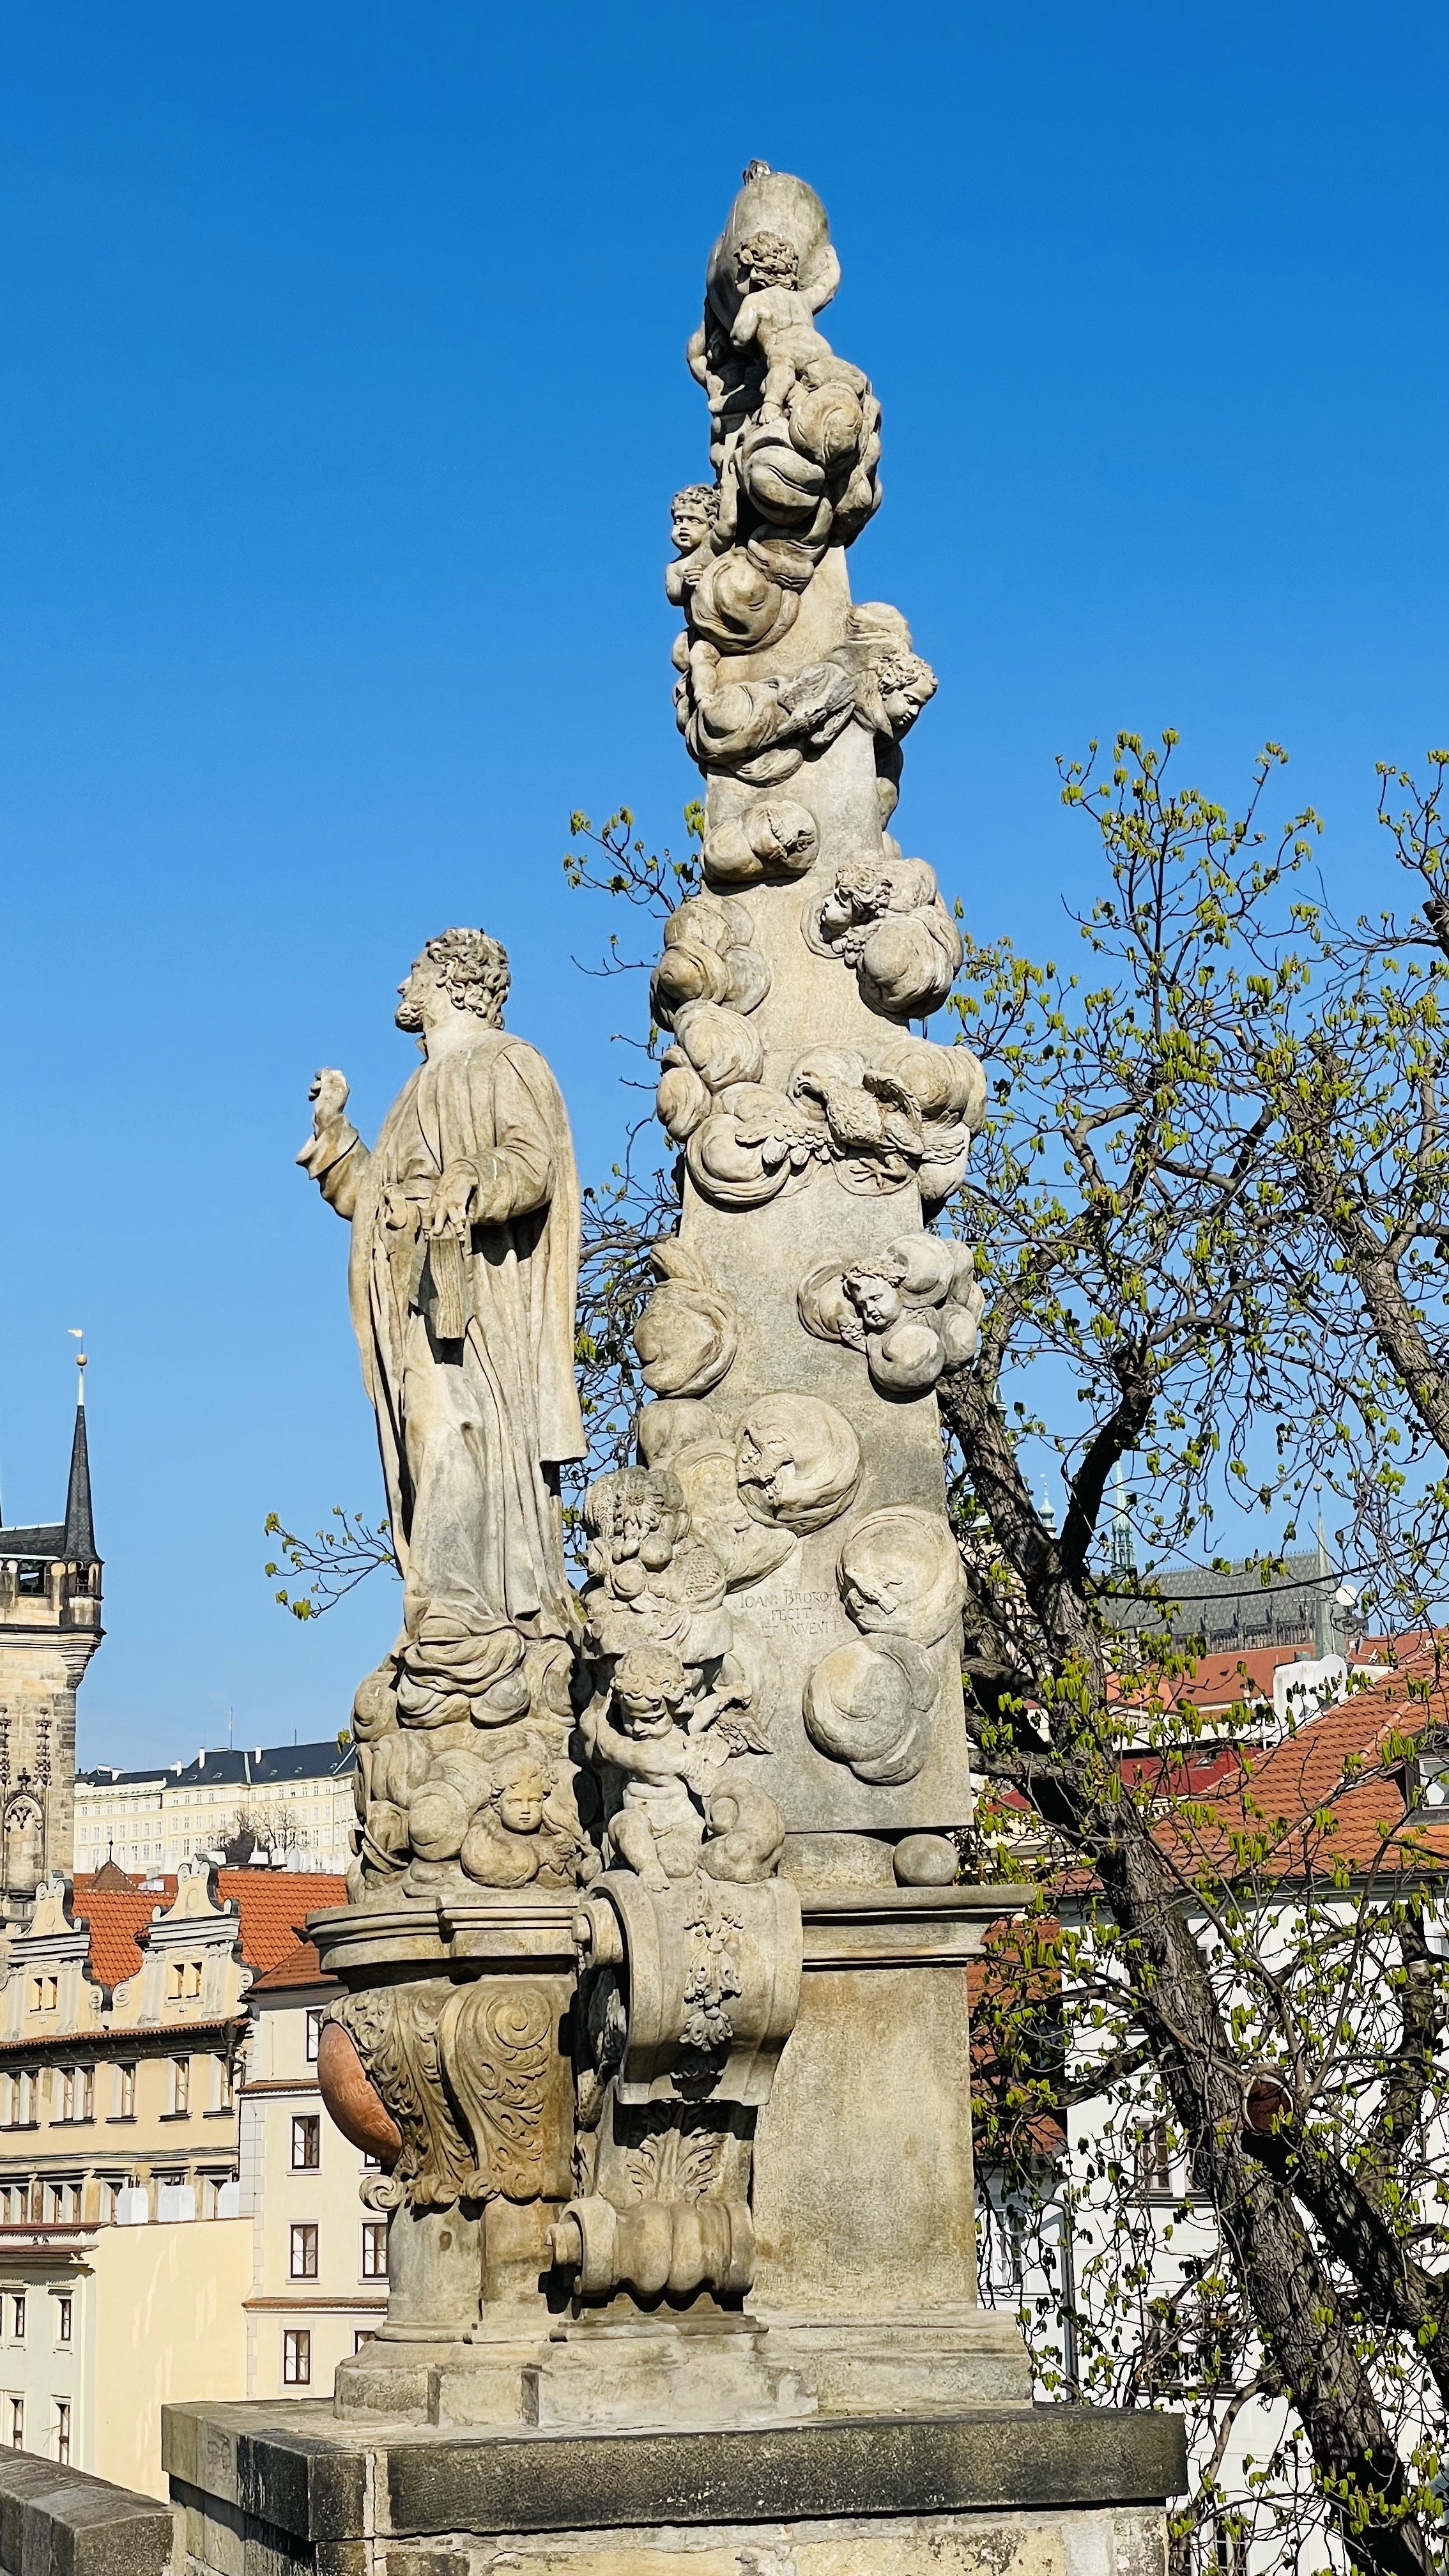 Statue of St. Cajetan with Charles Bridge (Copia)